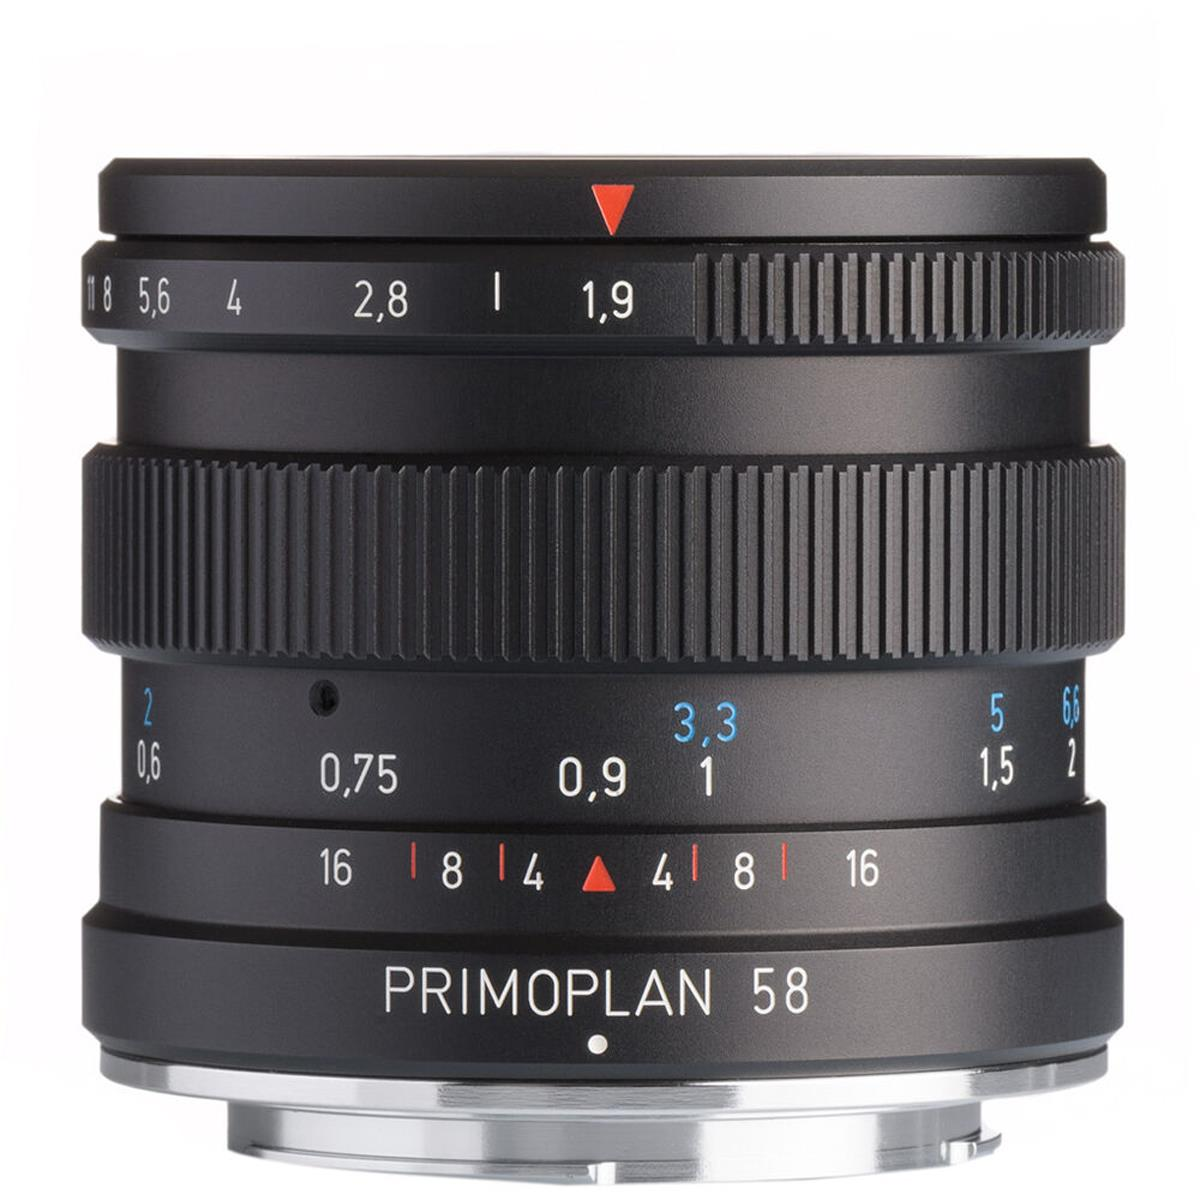 Meyer-Optik Gorlitz Primoplan 58 f1.9 II Lens for Leica L